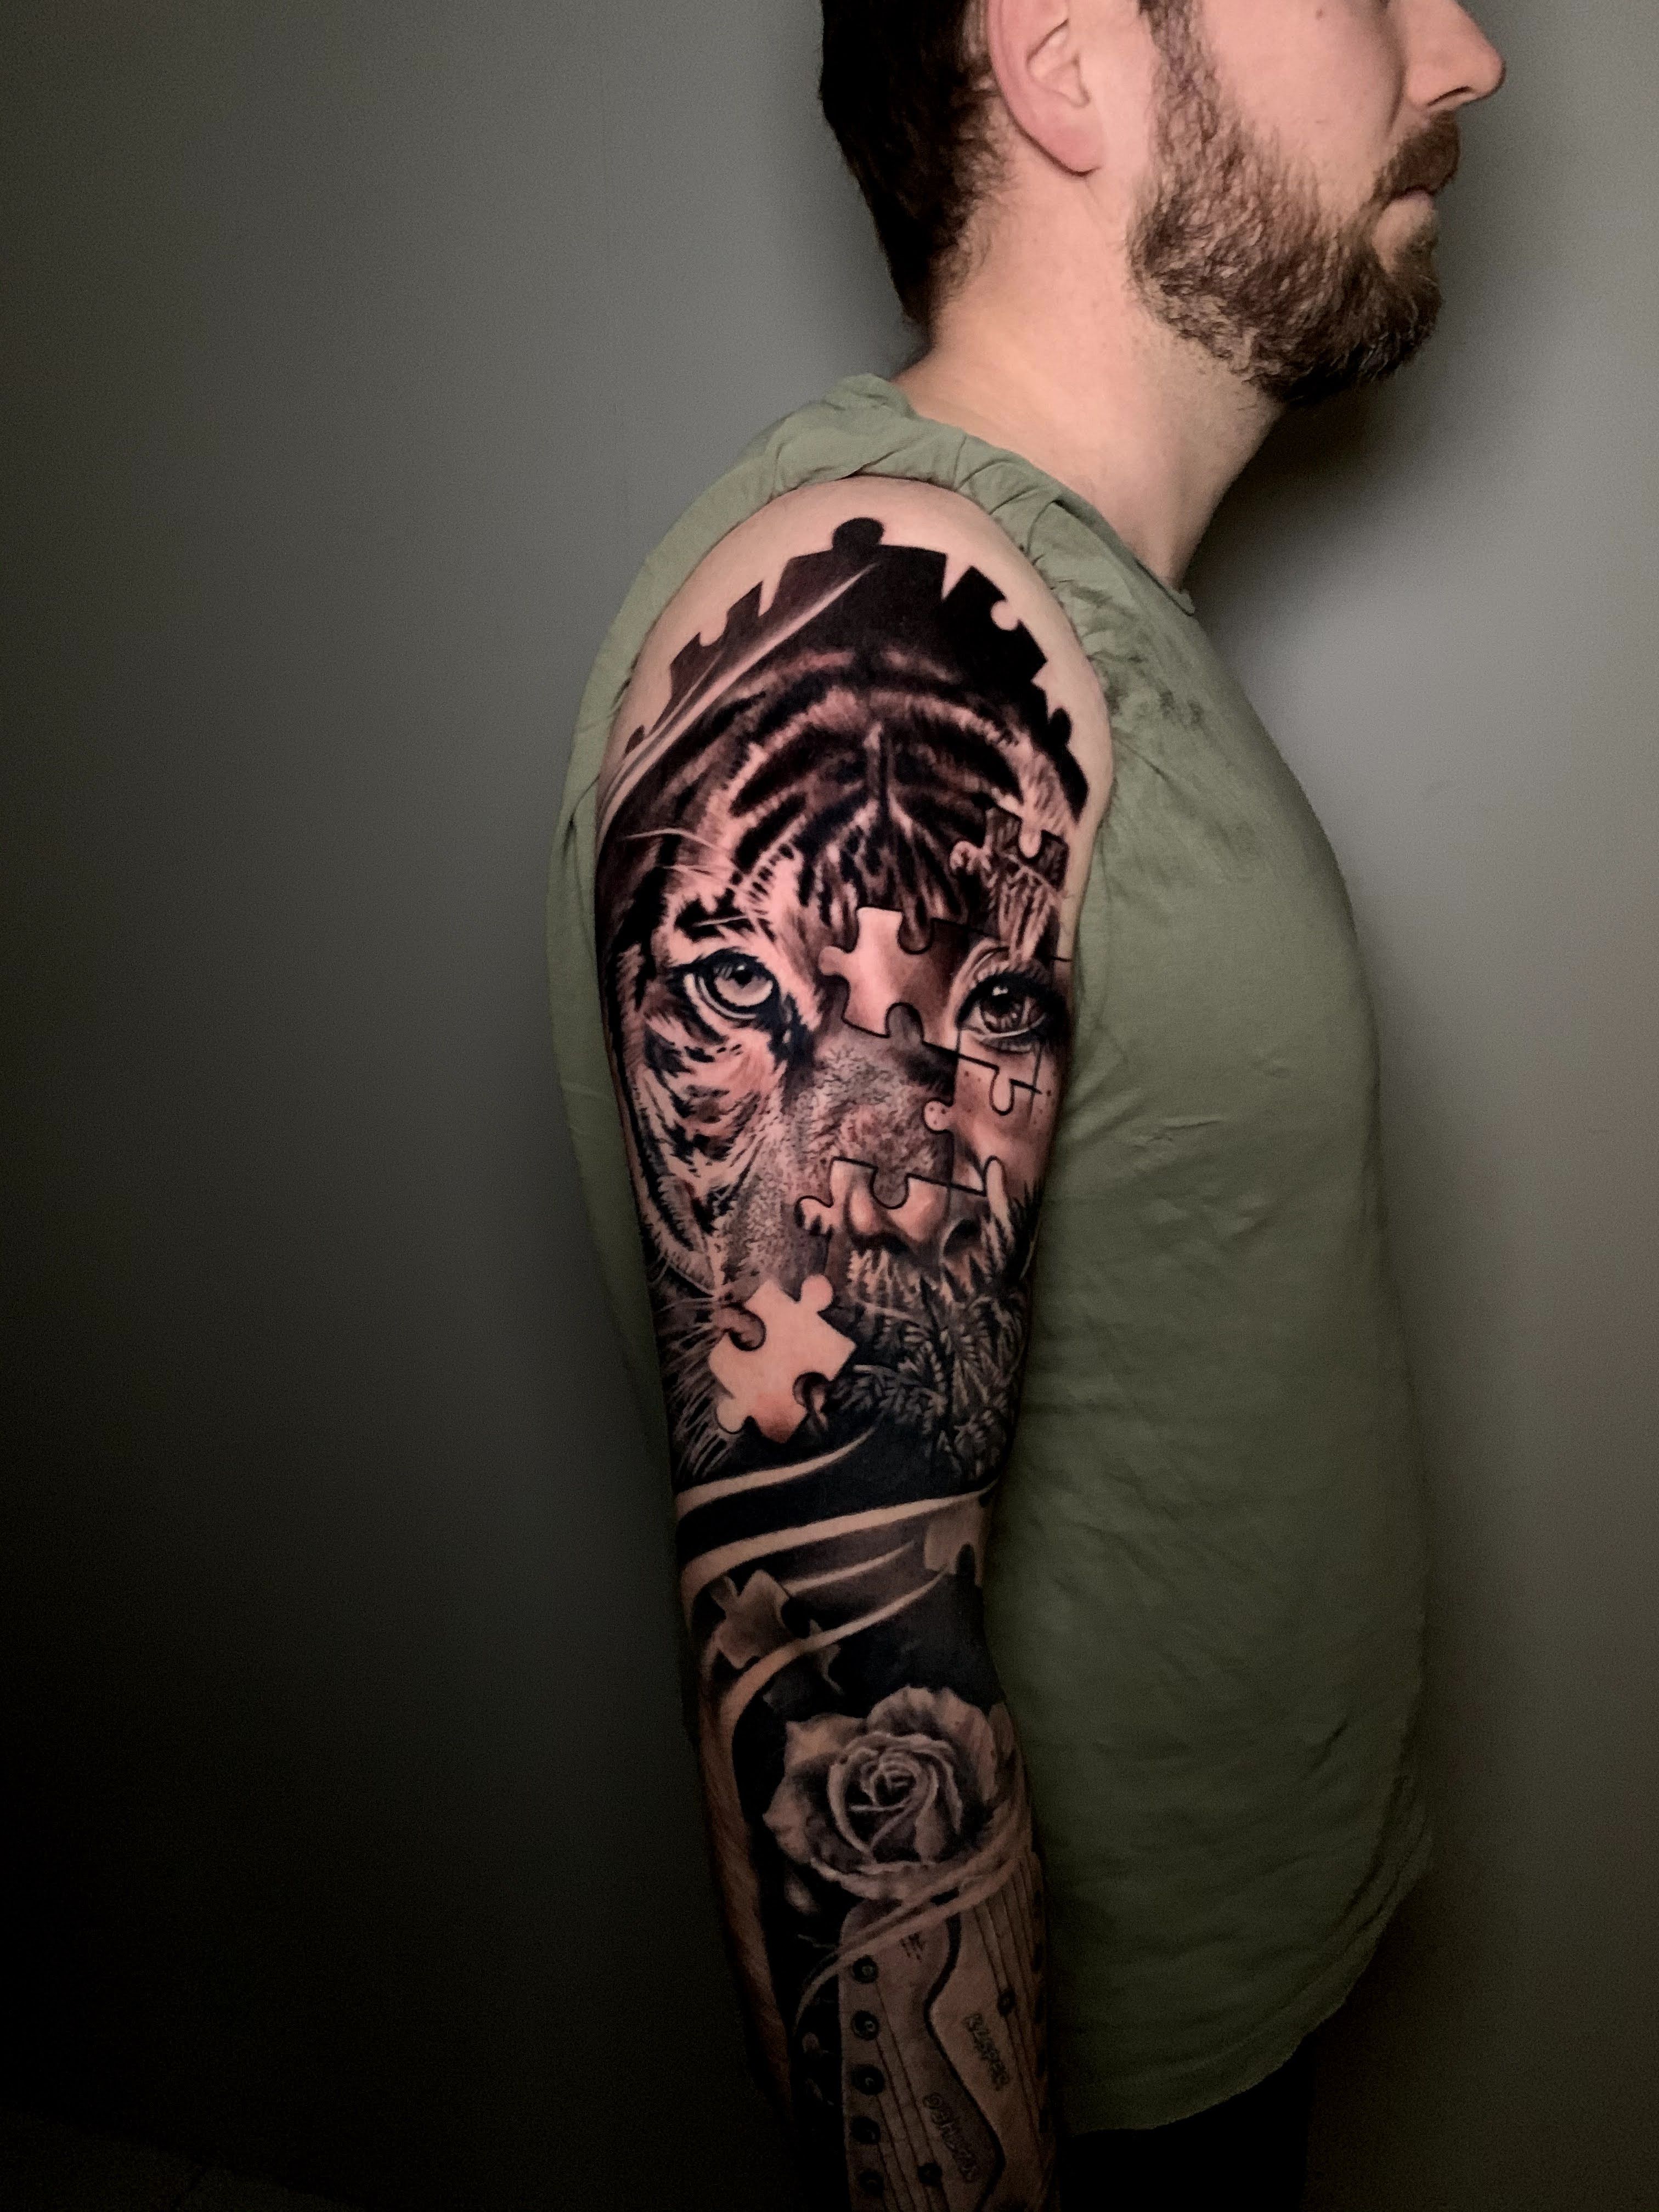 Done by Myself (Day Bond) at Taunton Tattoo Company in Oshawa Ontario  Canada. : r/tattoos